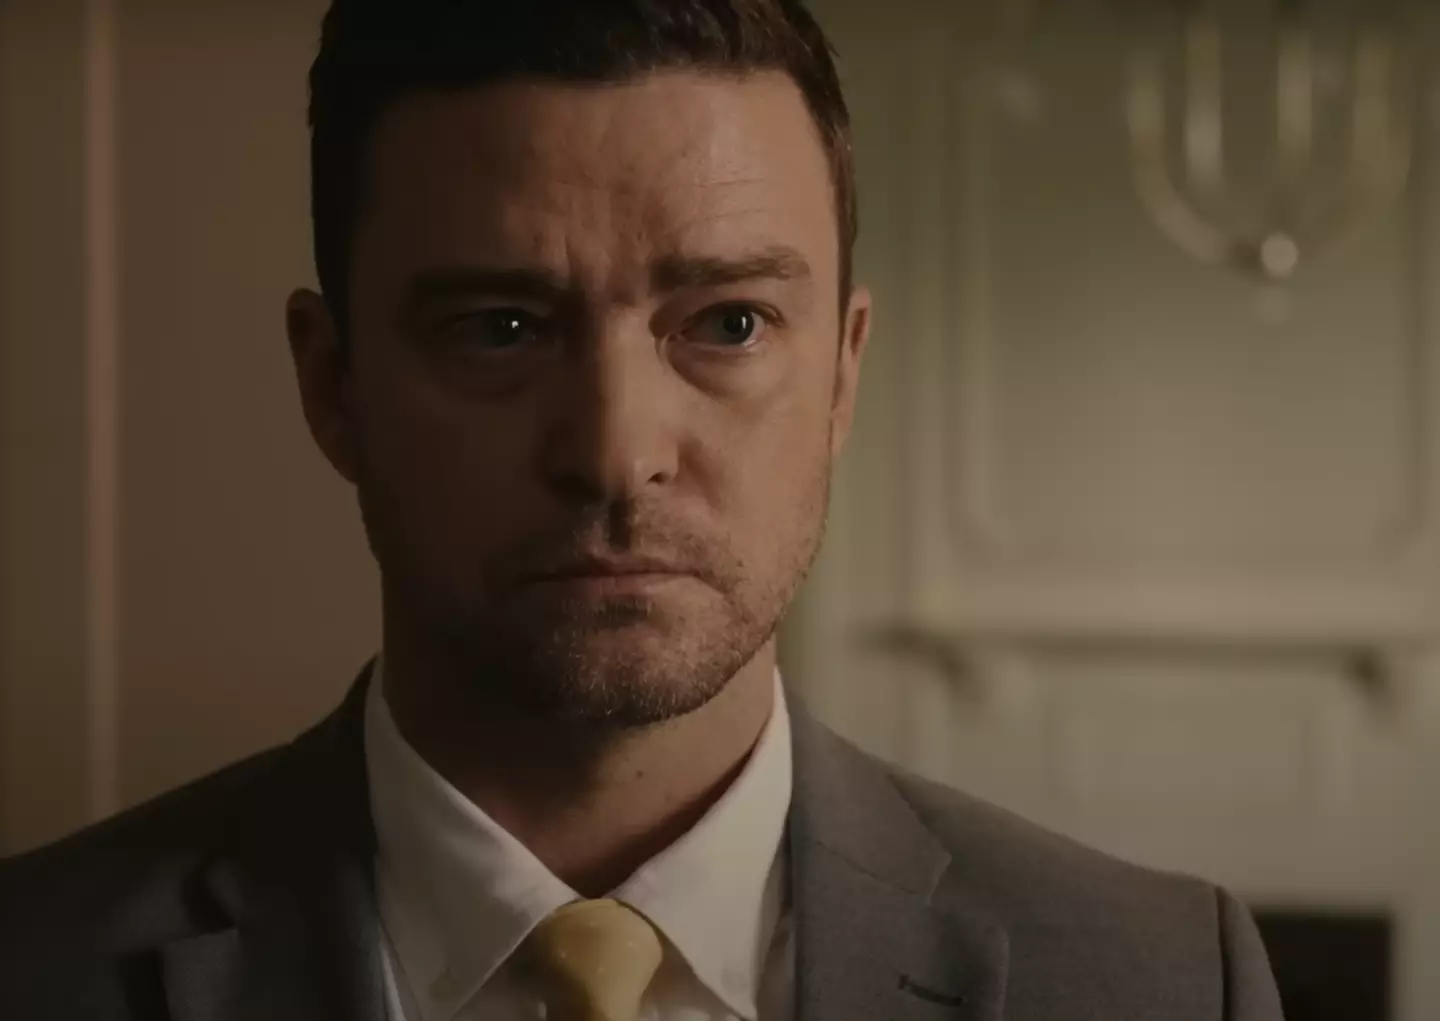 Singer Justin Timberlake plays Will Grady, the murder victim's boyfriend.